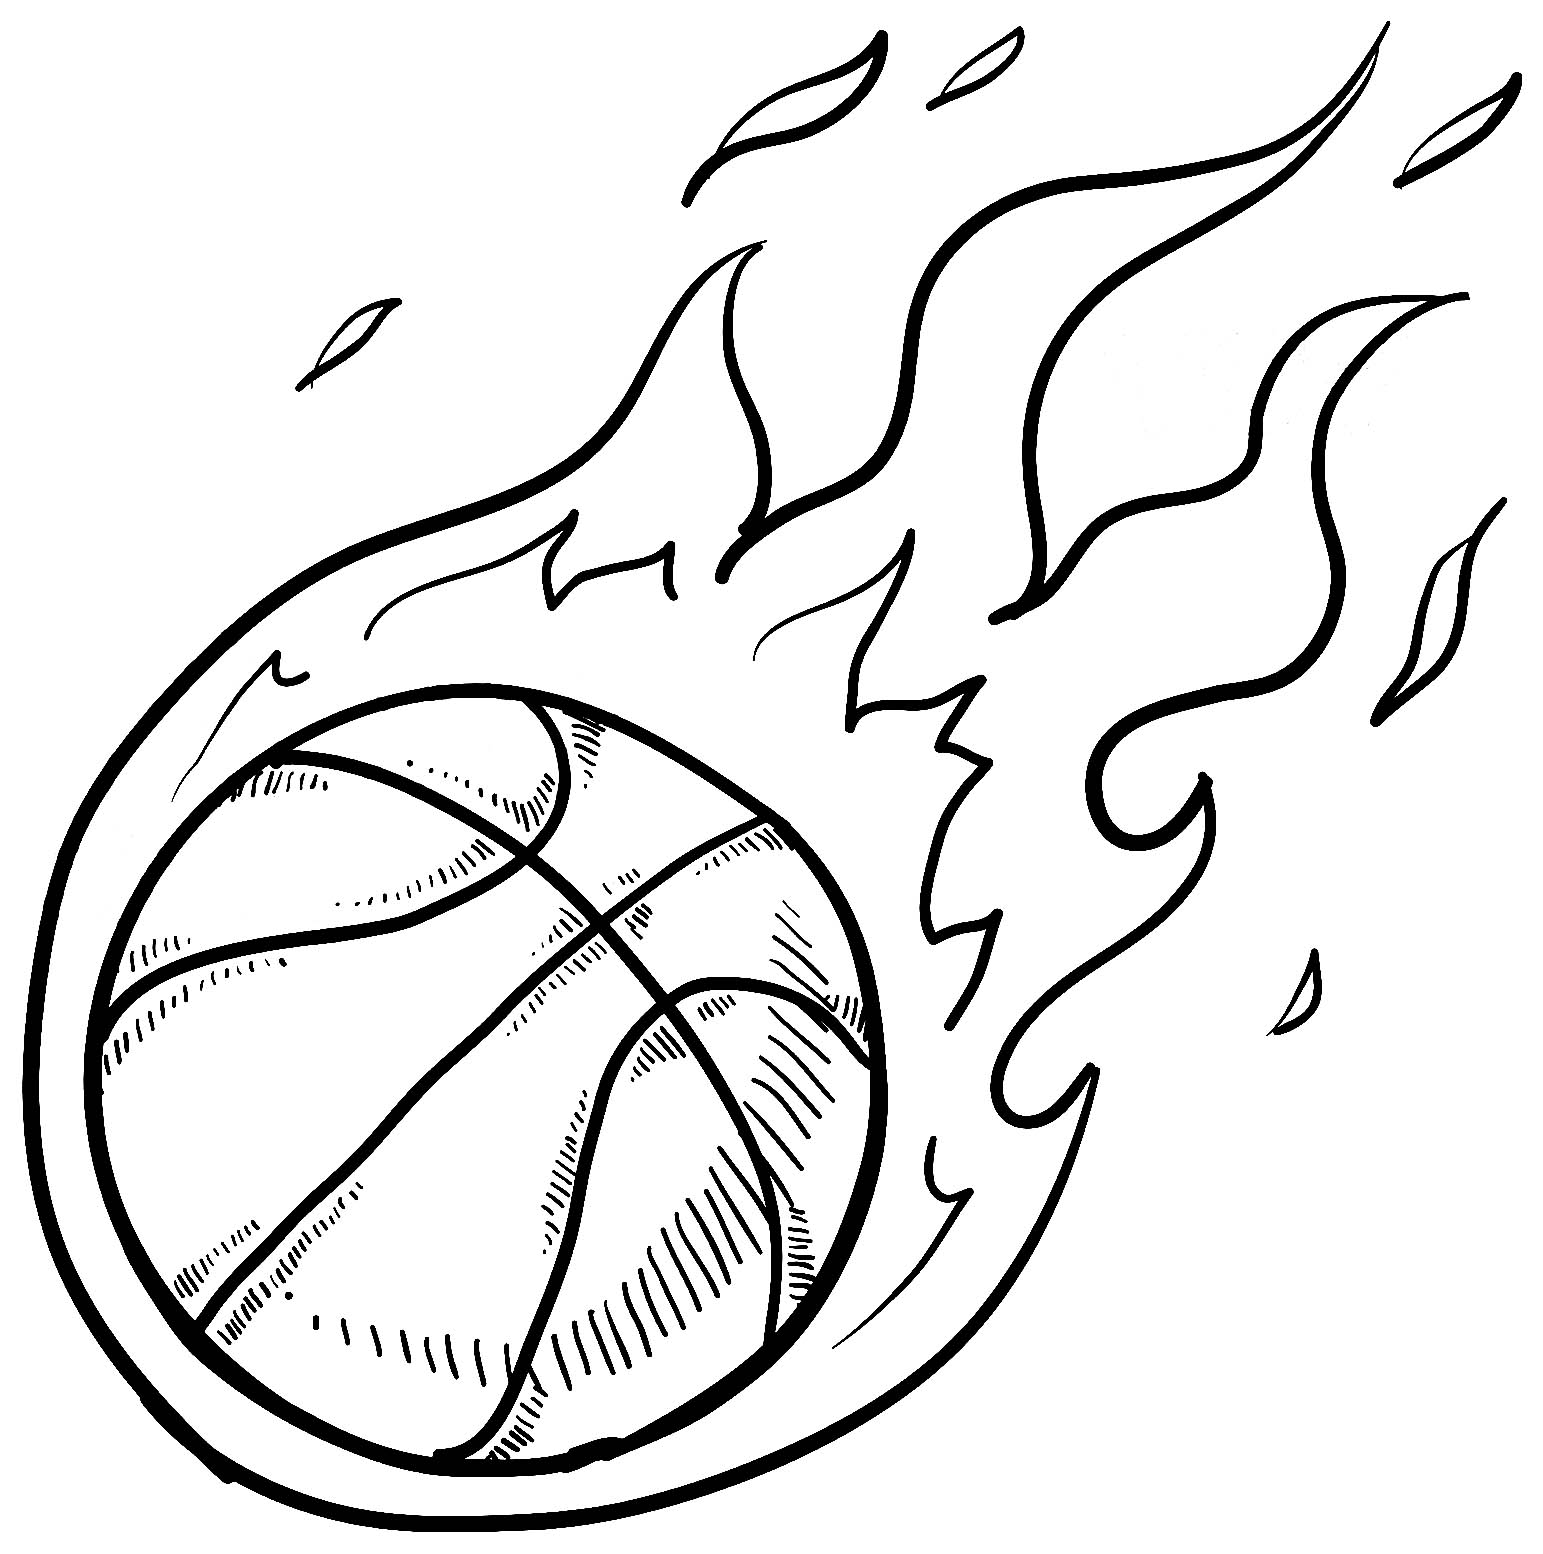 basketball ball coloring page